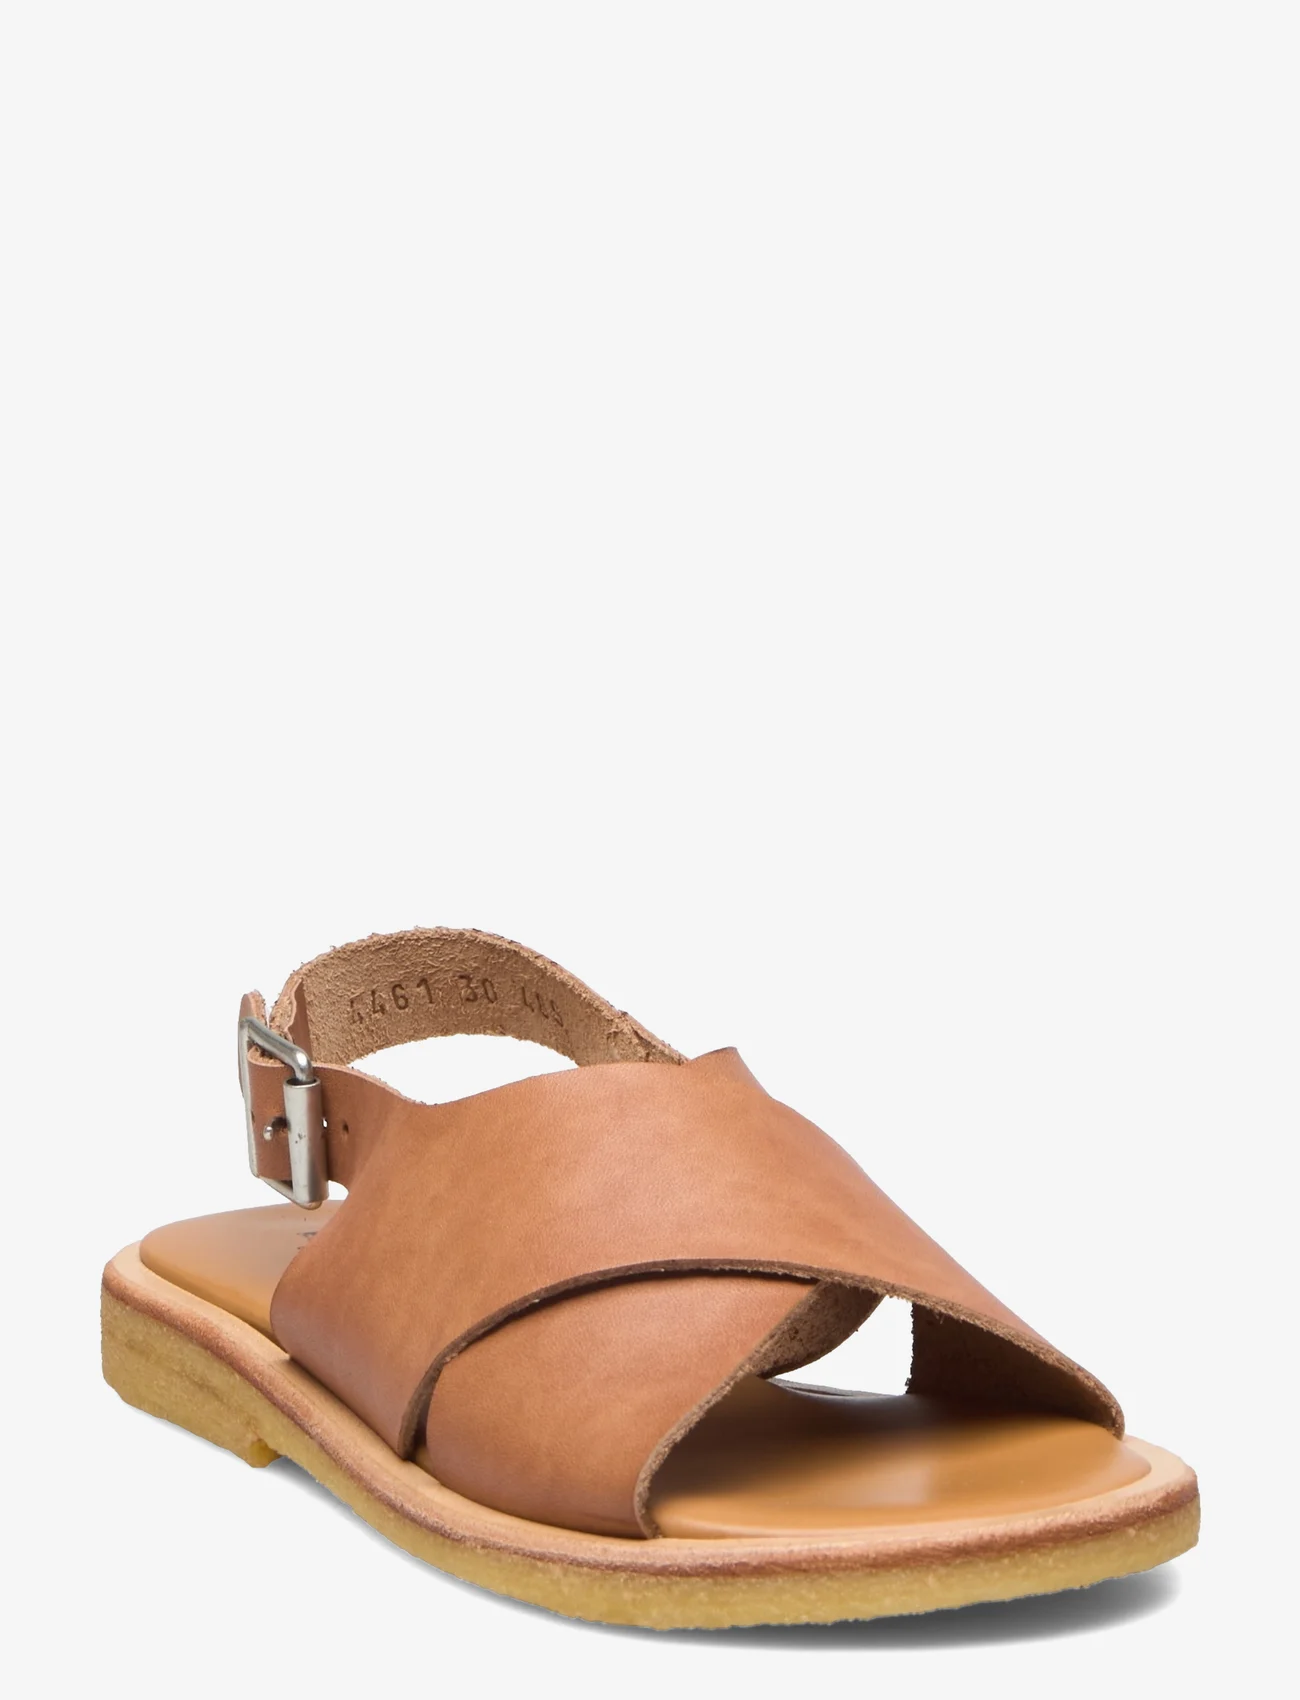 ANGULUS - Sandals - flat - open toe - op - summer savings - 1789 tan - 0